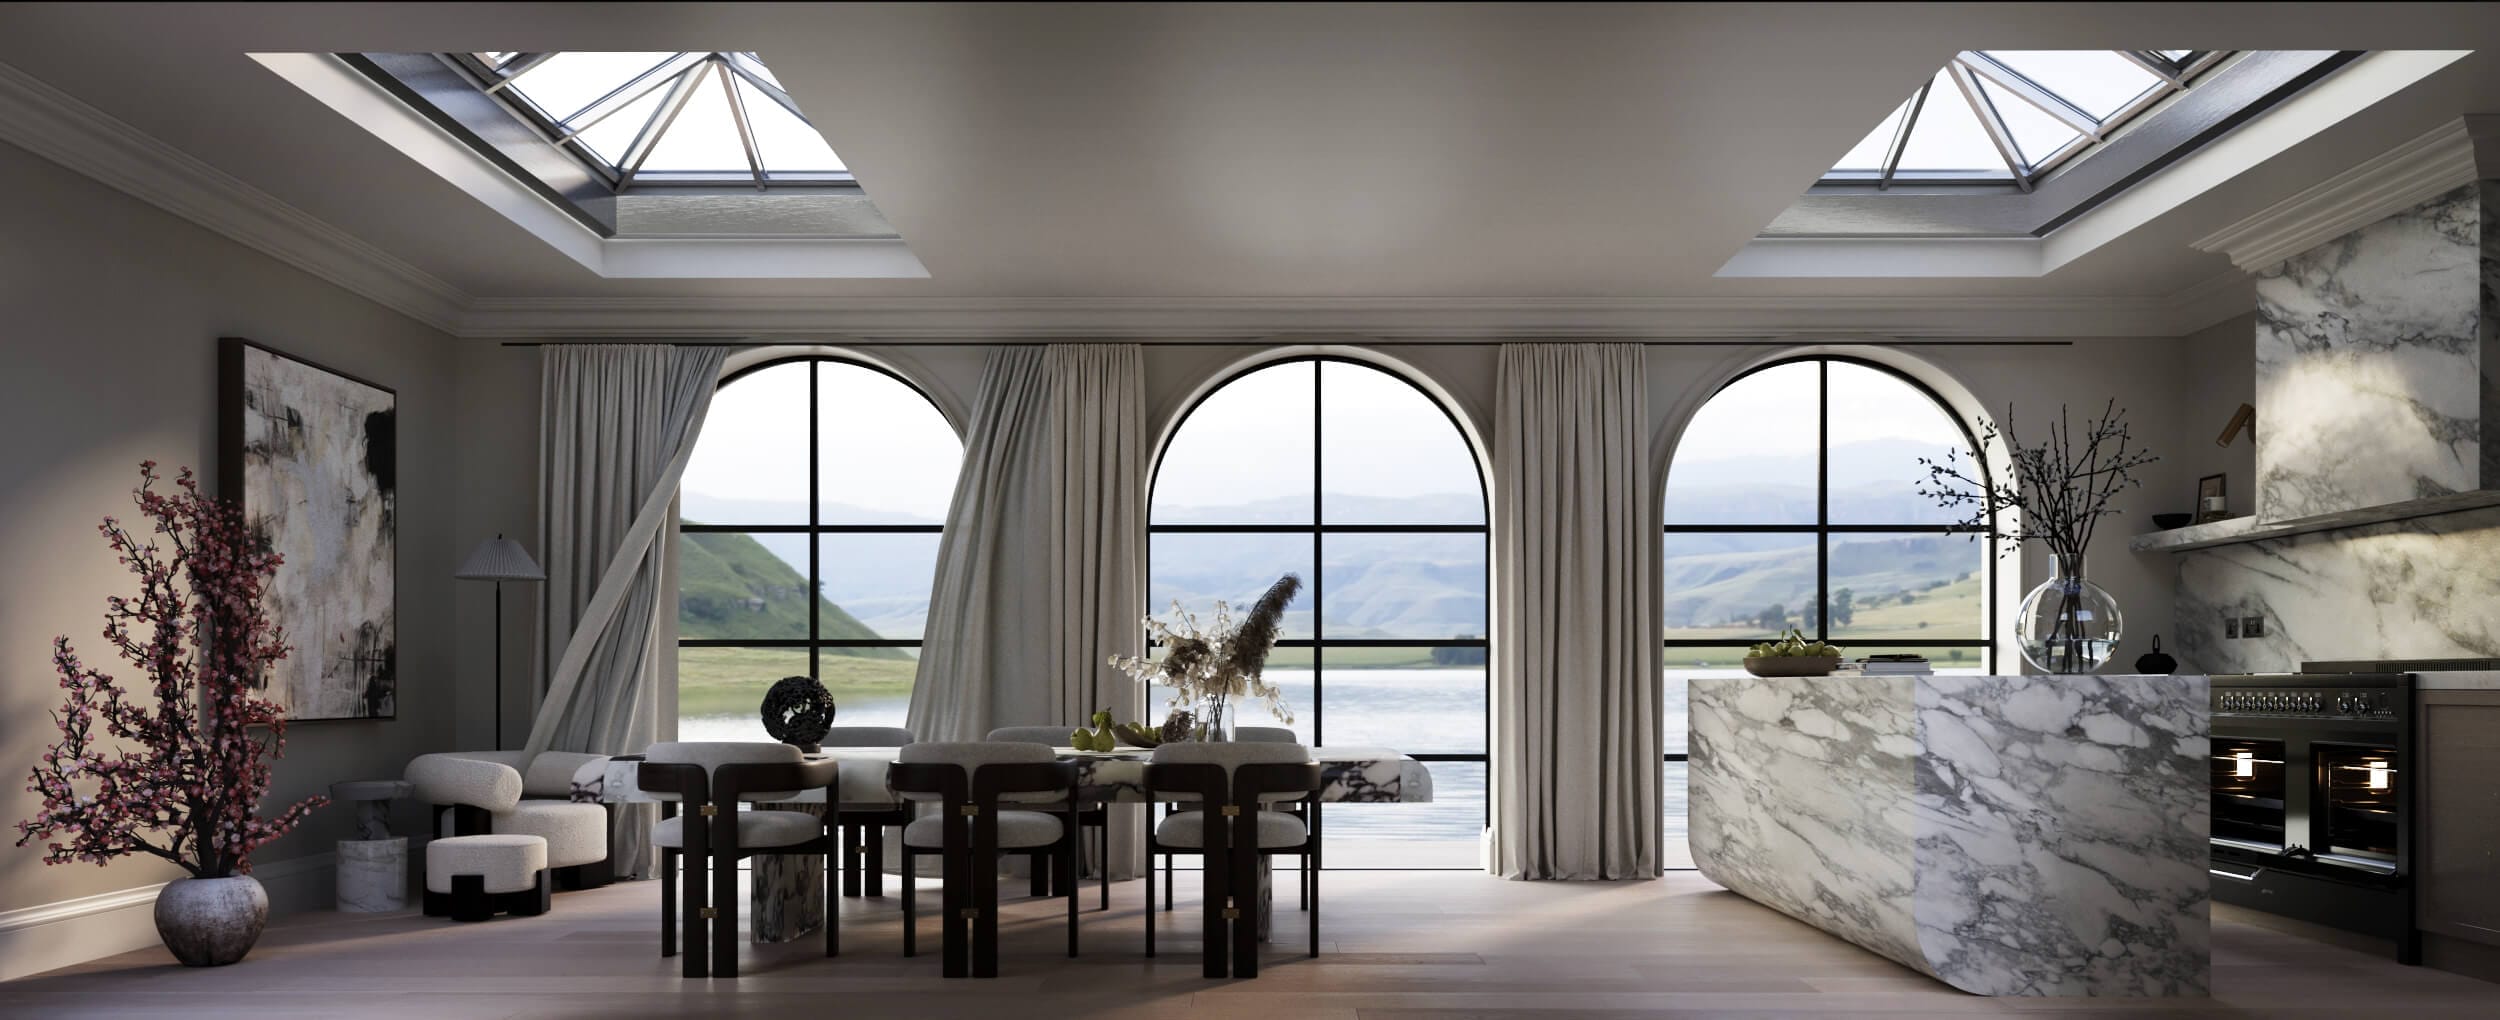 christopher-david-design-luxury-residential-architecture-interior-landscape-design-studio-modern-extension-arch